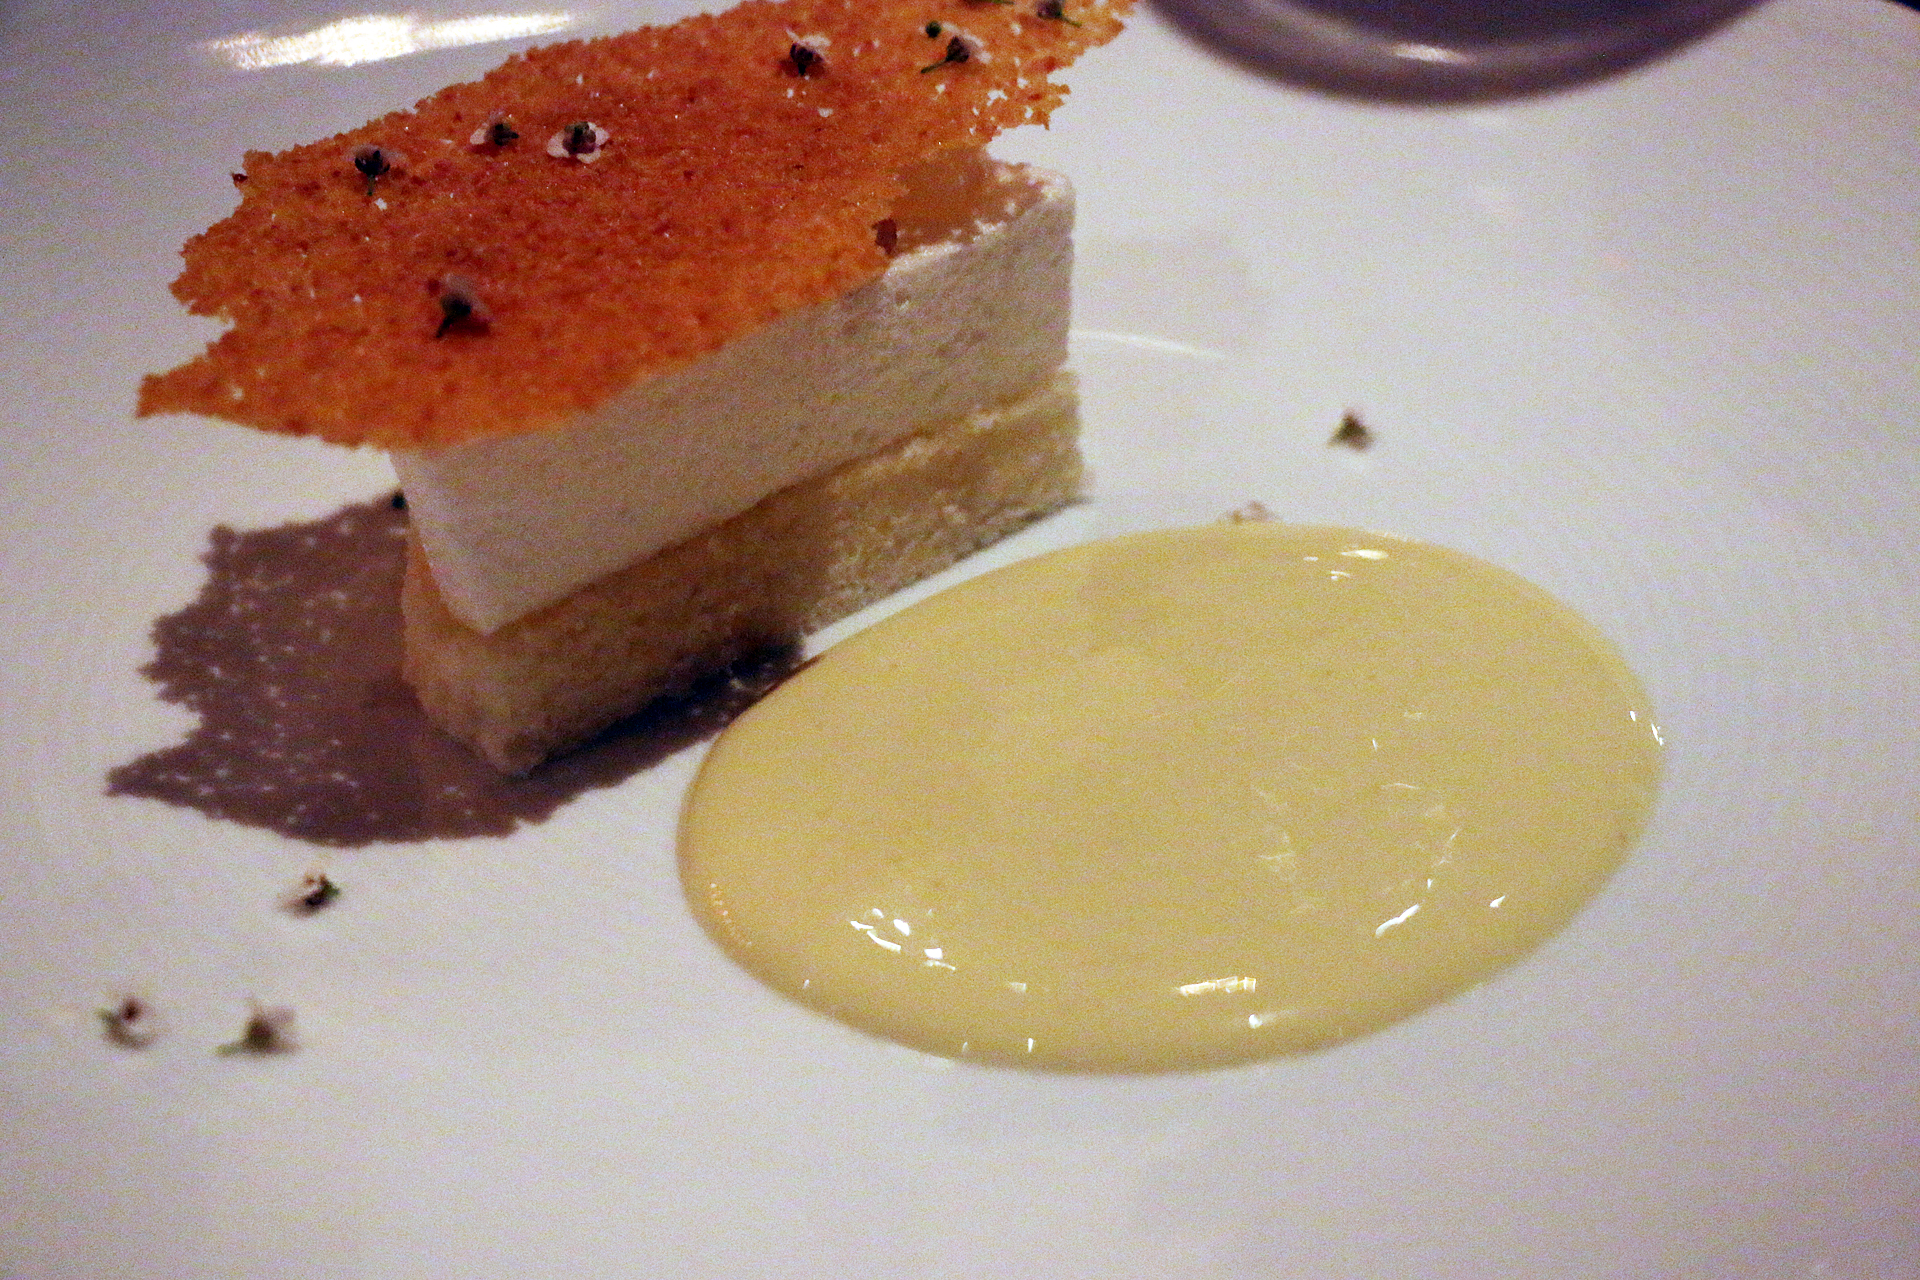 Soft-baked meringue, Meyer lemon cake and almond praline.